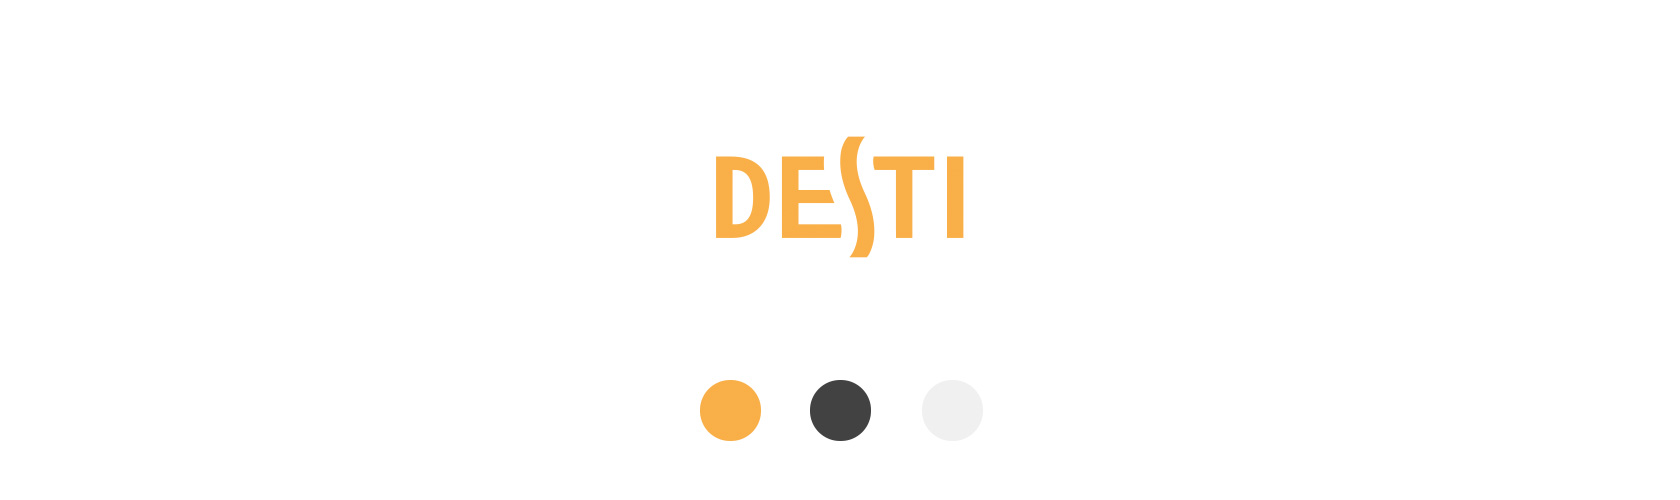 Desti iOS App